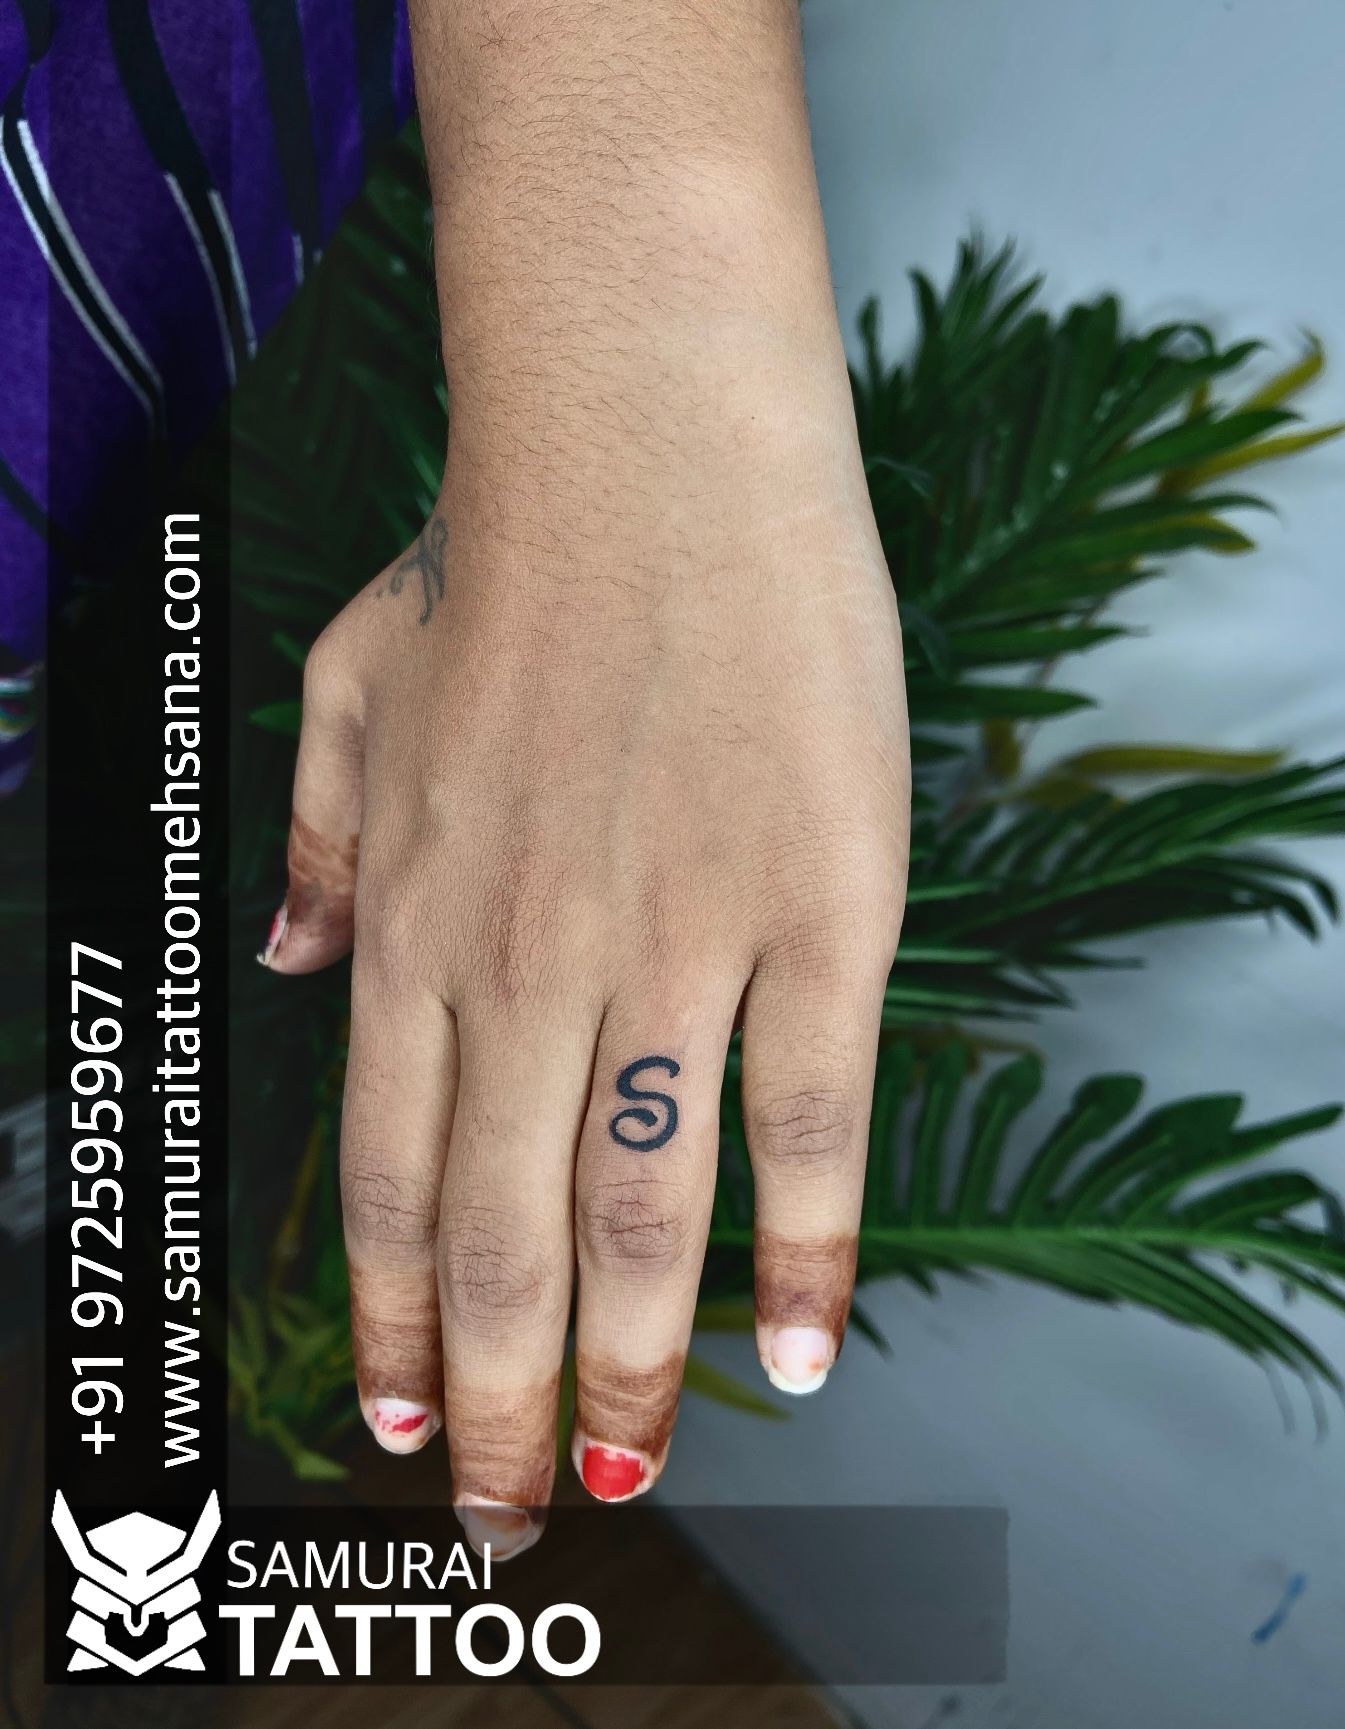 S Letter Tattoos For Girls  S Letter Tattoo Design Ideas For Girls   Womens Tattoos  YouTube